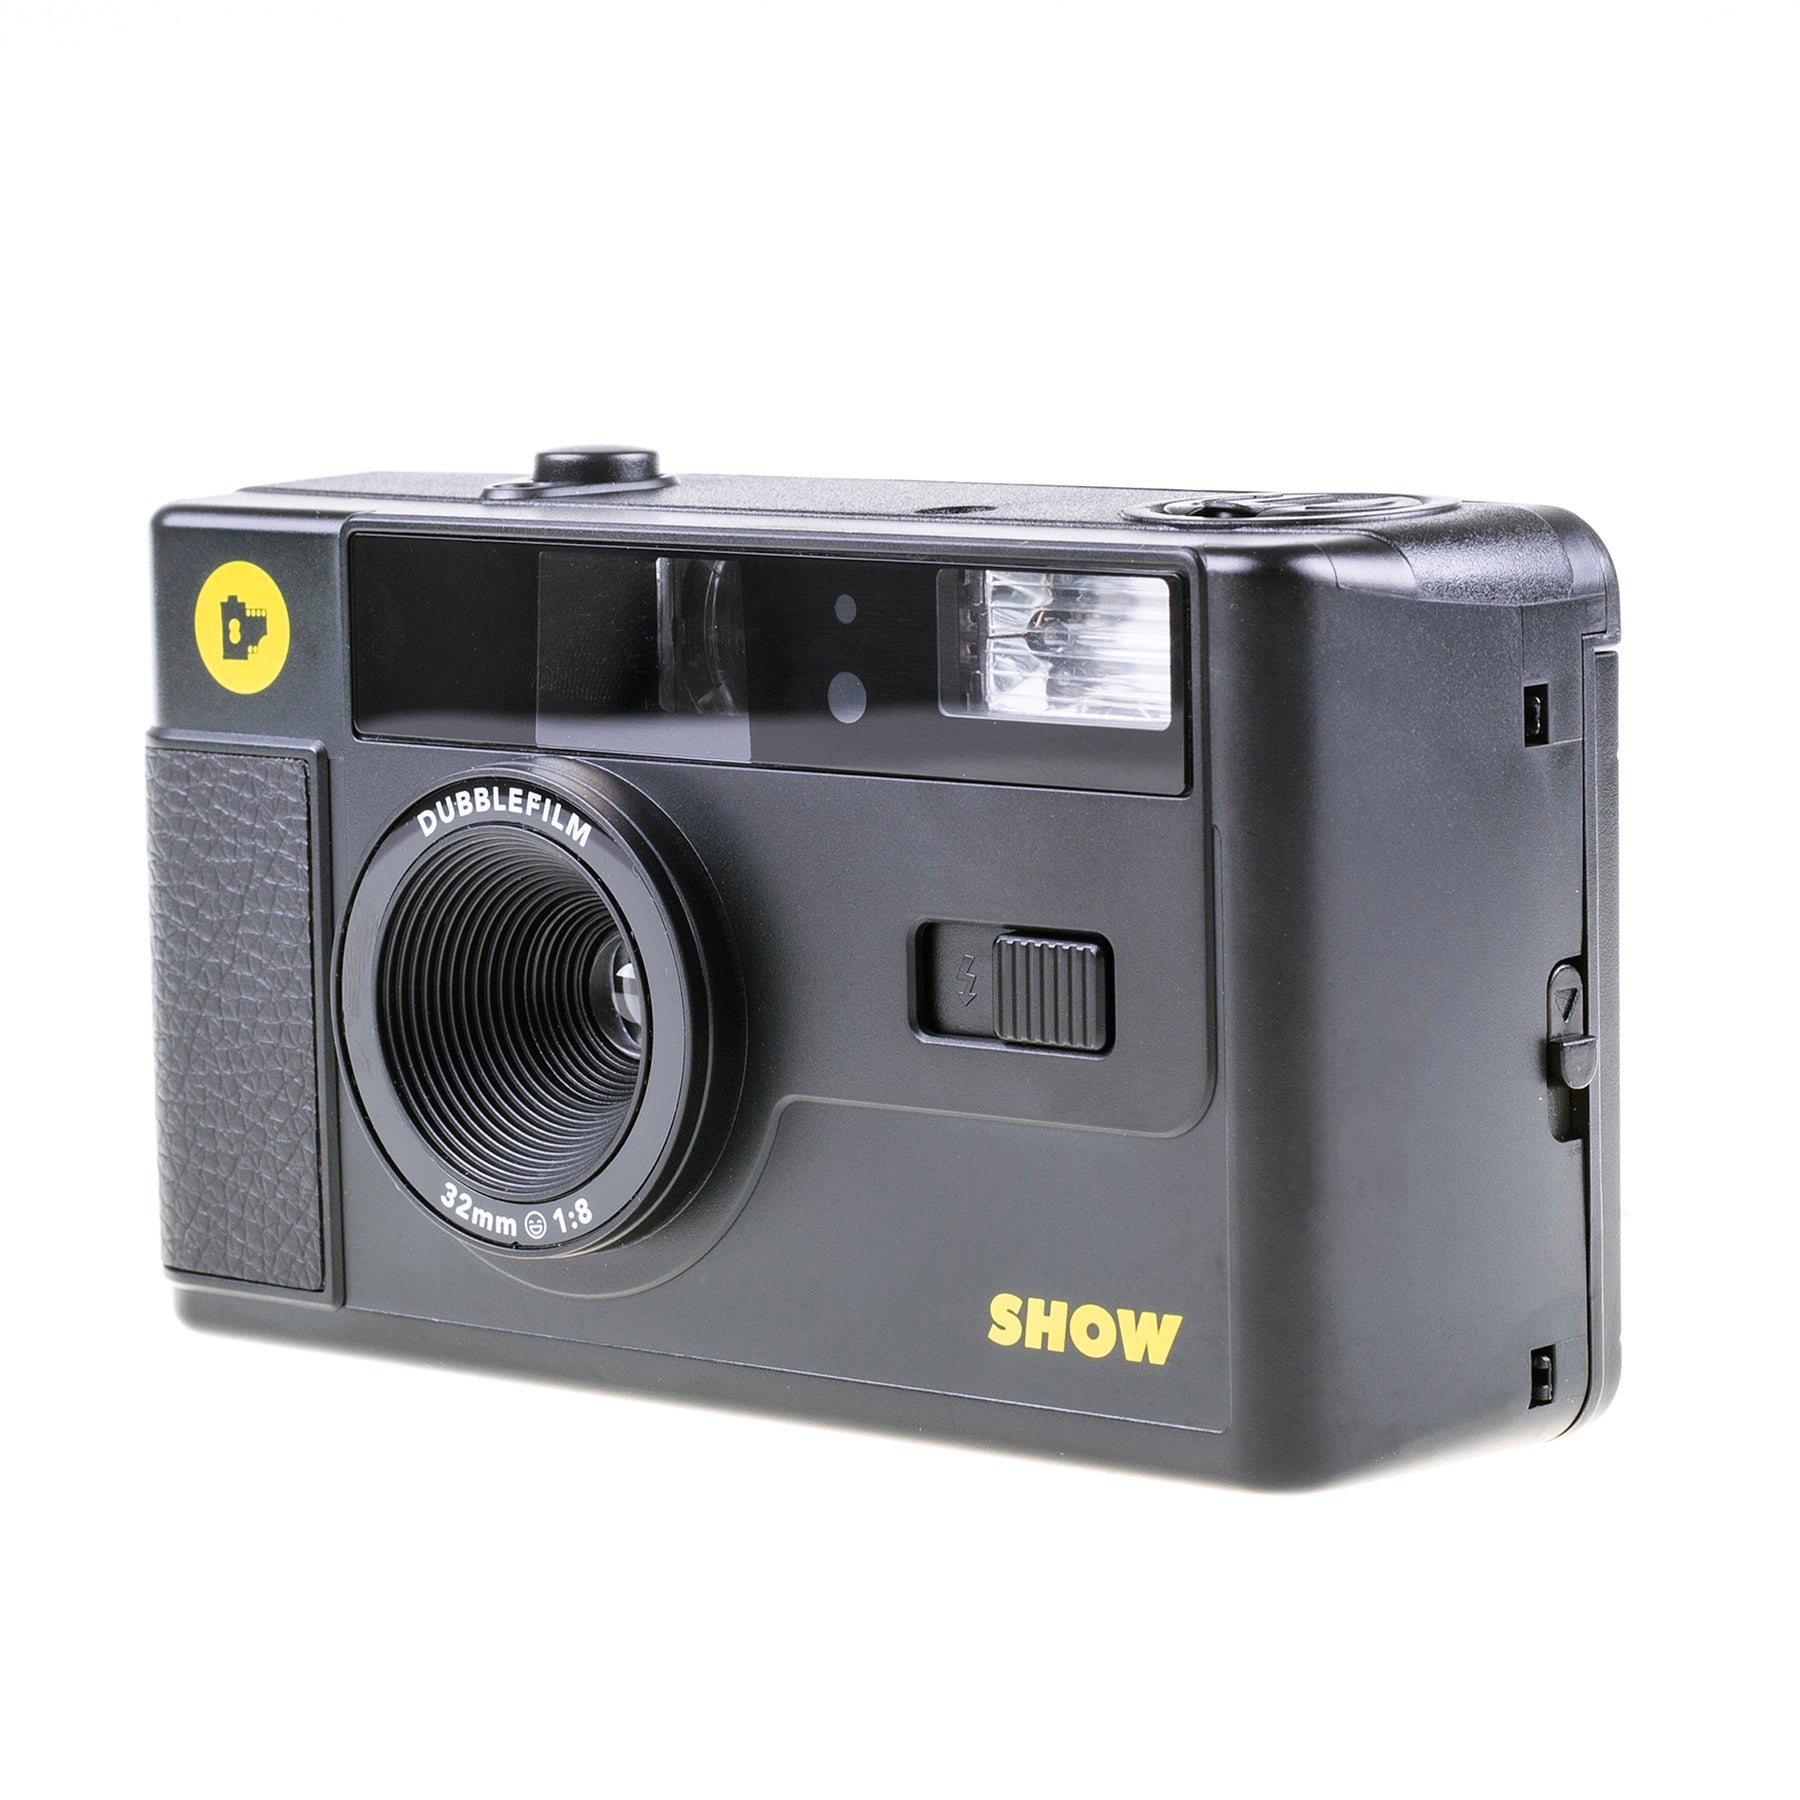 SHOW camera by Dubblefilm - Black